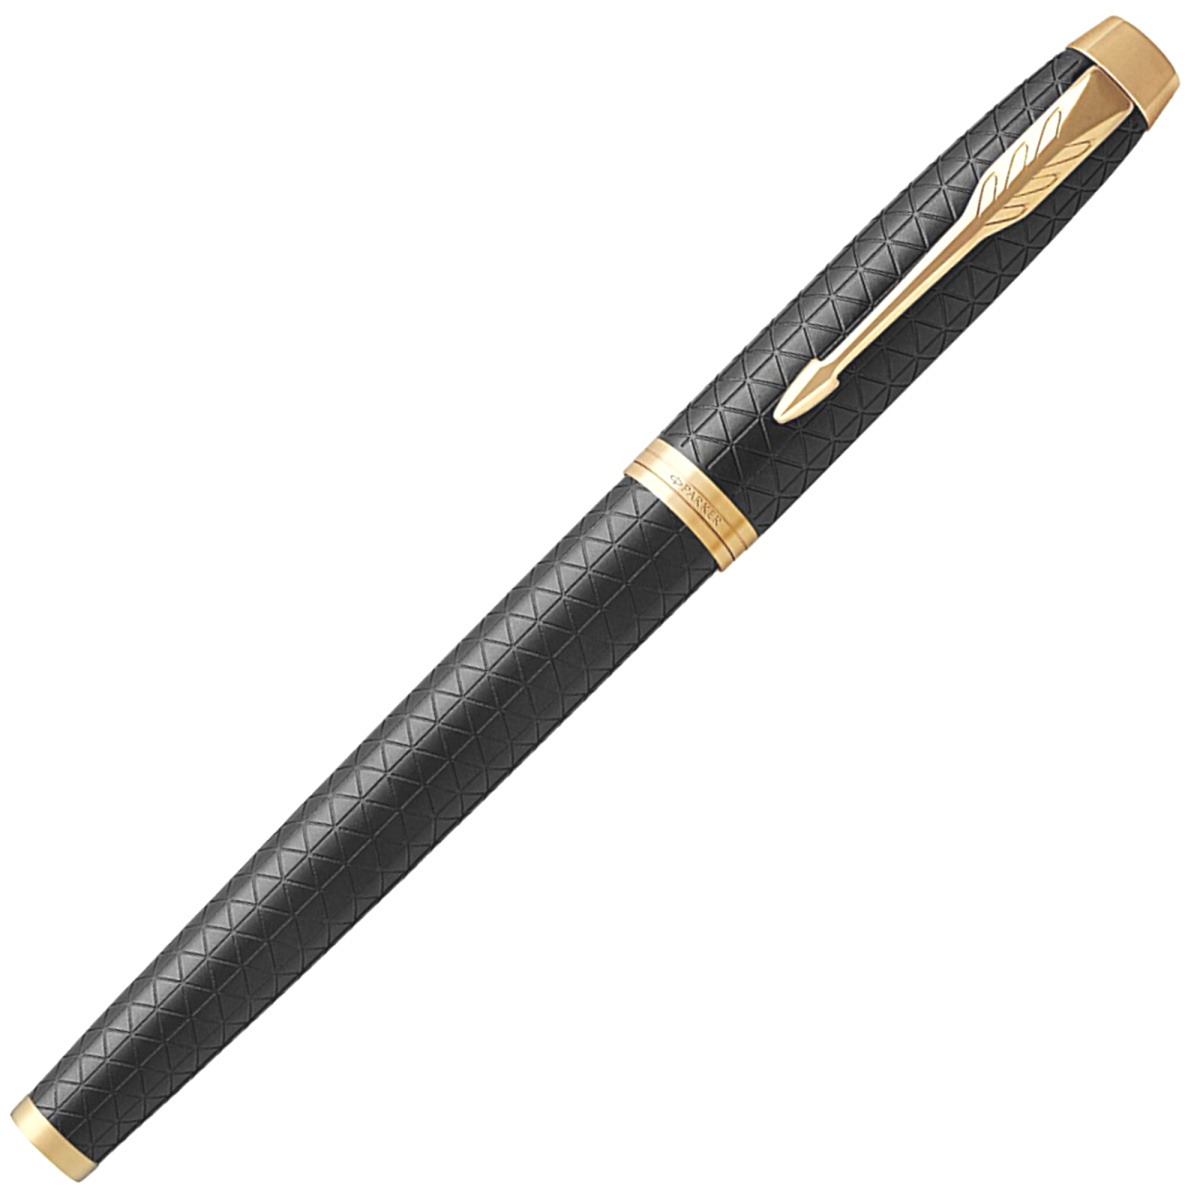  Перьевая ручка Parker IM Premium F323, Black GT (Перо F), фото 2